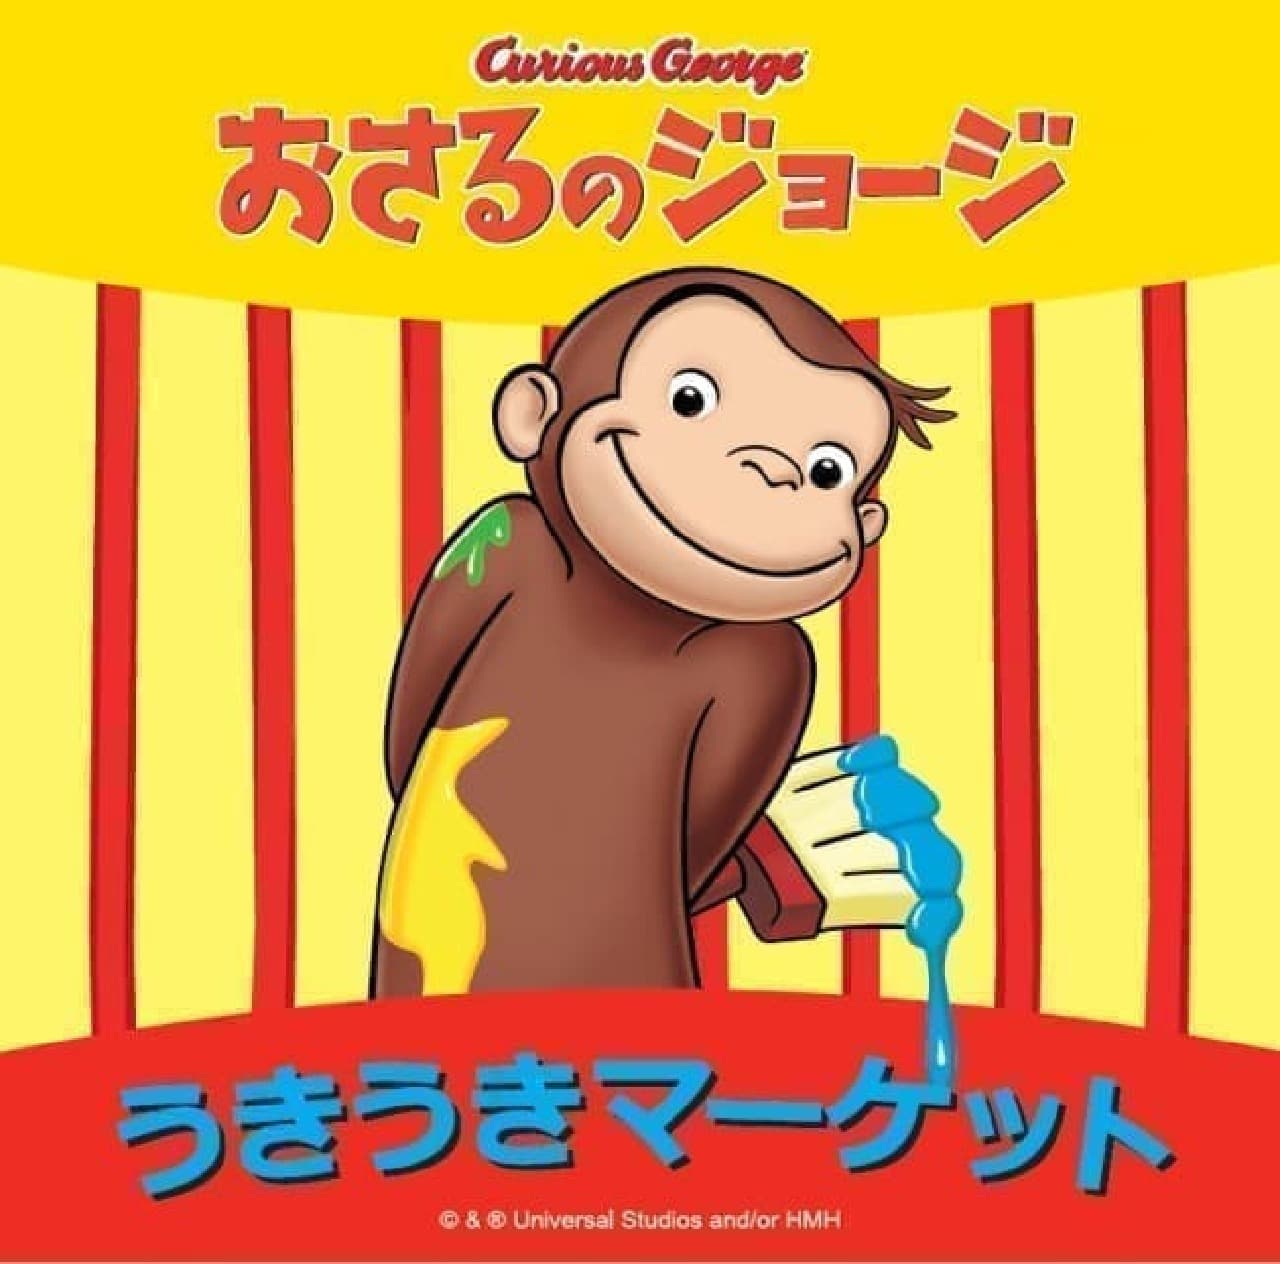 "Scandinavian food stalls" are now available at Odakyu Department Store Shinjuku --- "Curious George Ukiuki Market"